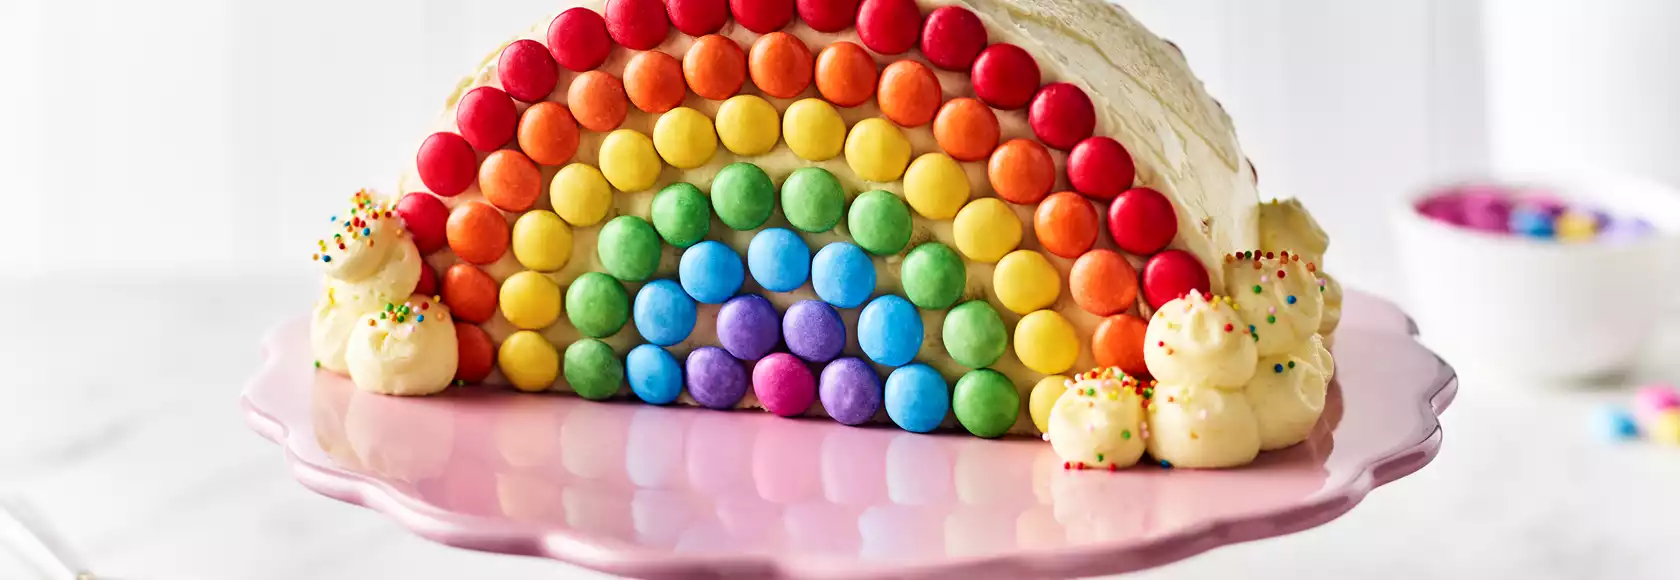 21 Best Rainbow Cake Recipes & Ideas - How to Make a Rainbow Cake - Parade